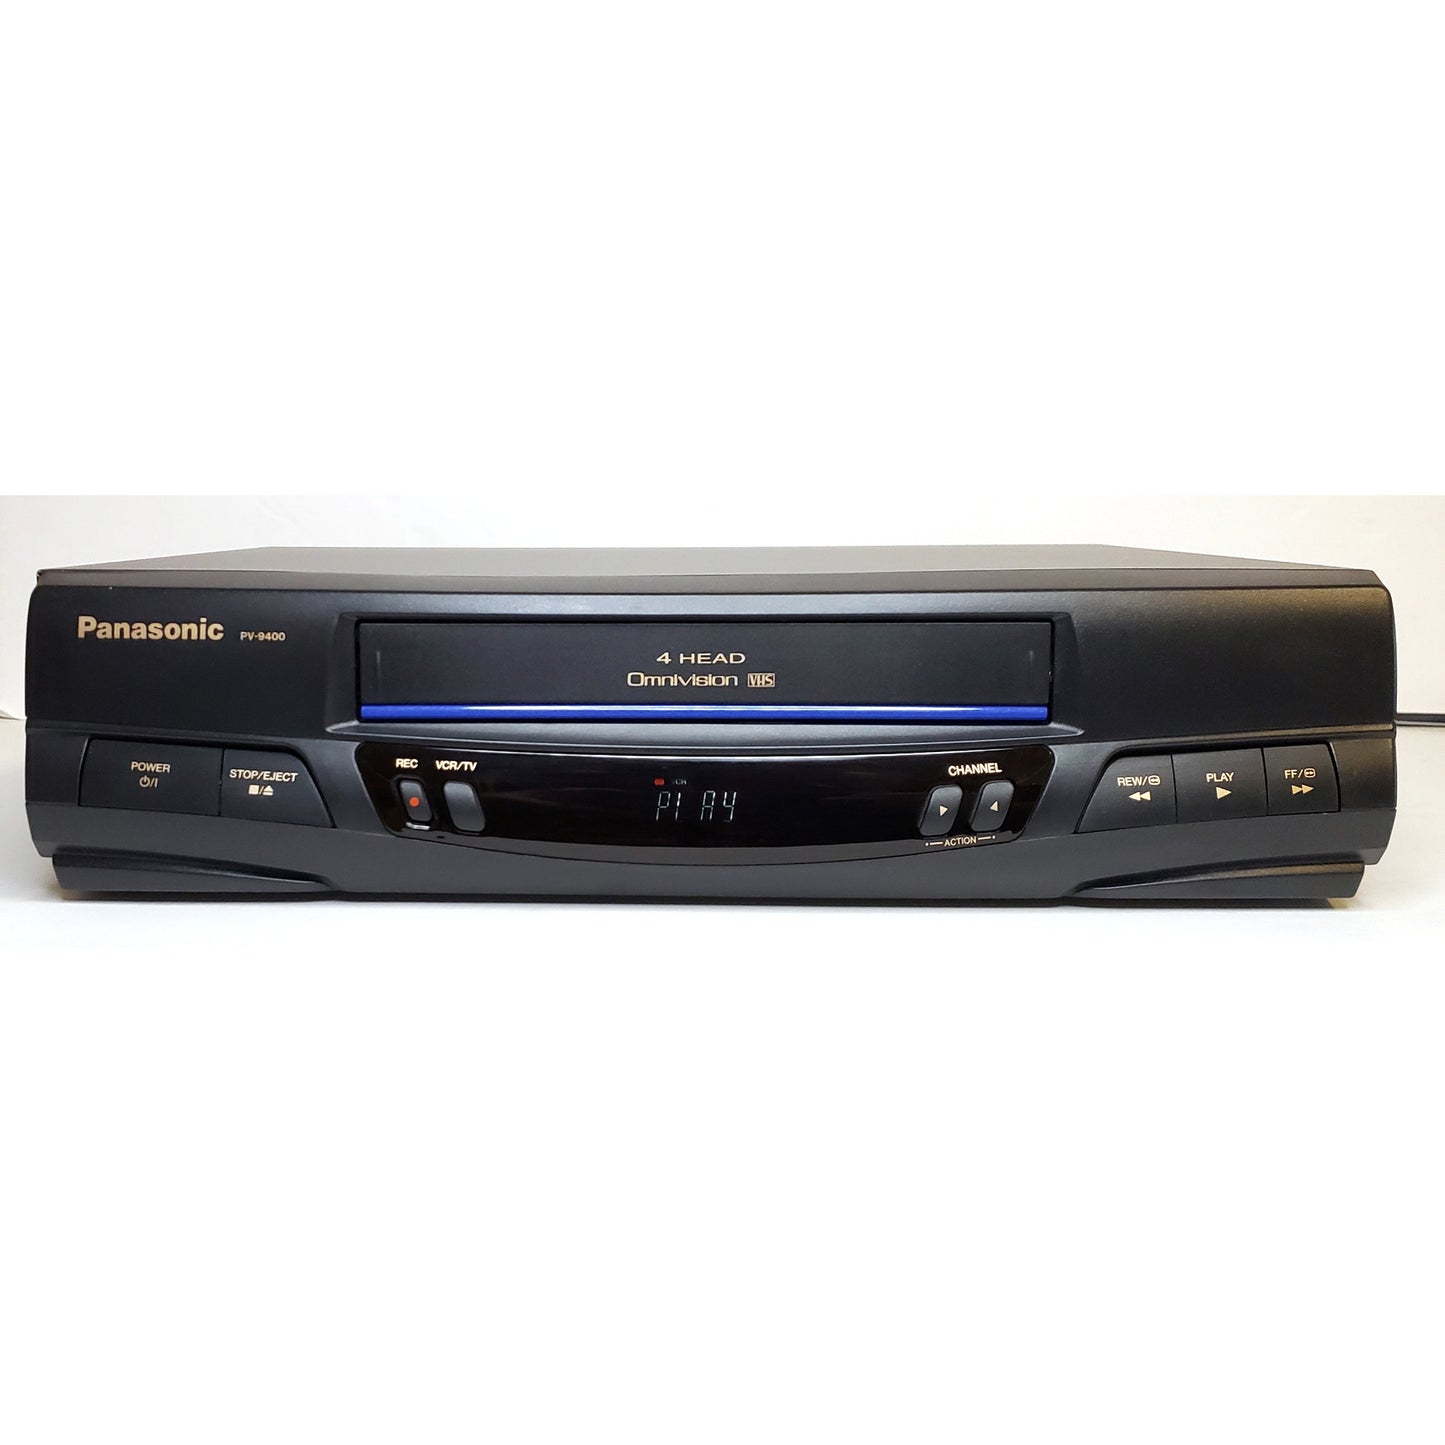 Panasonic PV-9400 Omnivision VCR - Front Panel